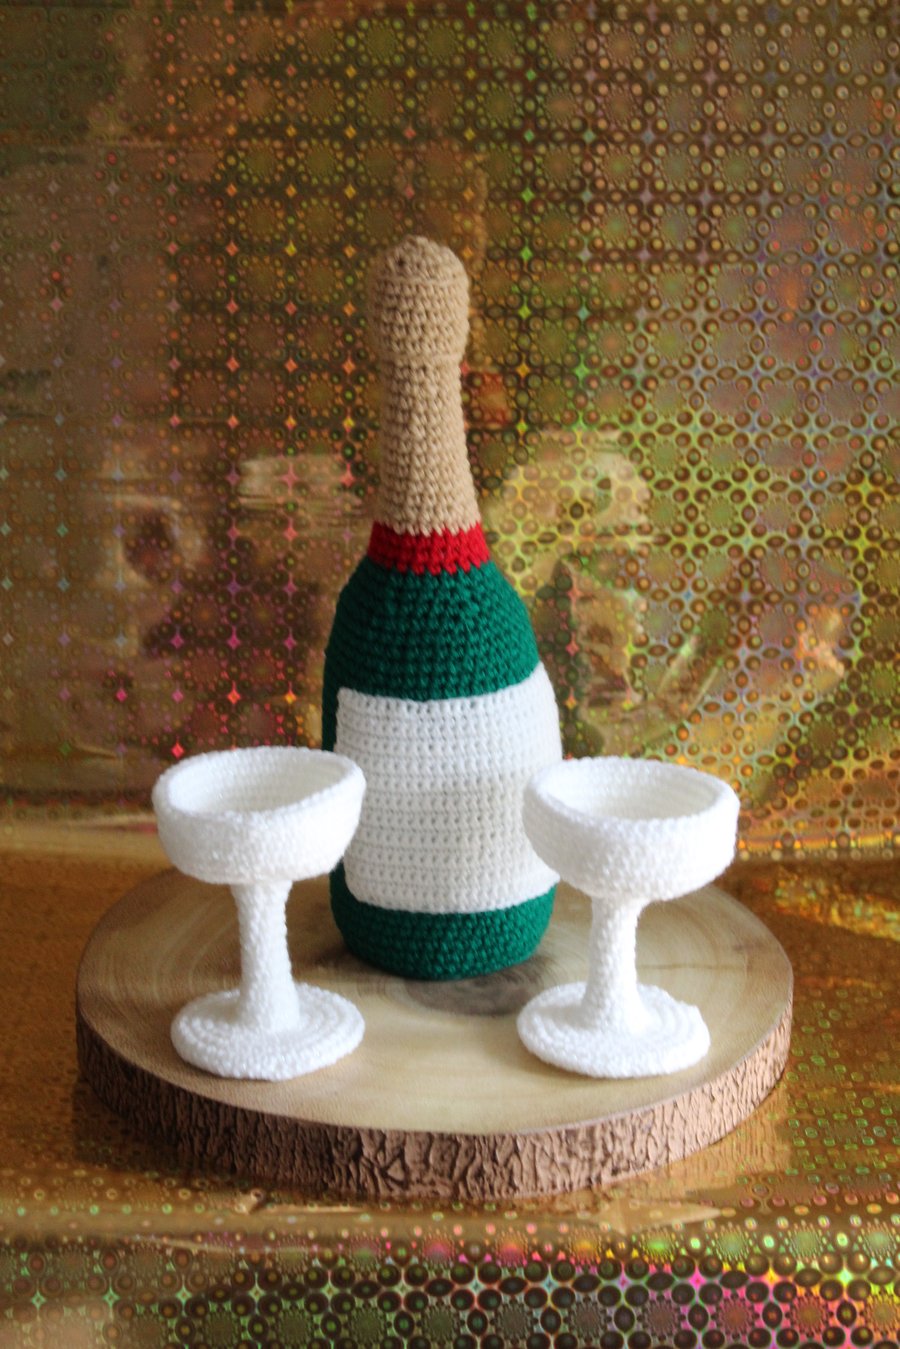 Crochet champagne bottle and glasses set.